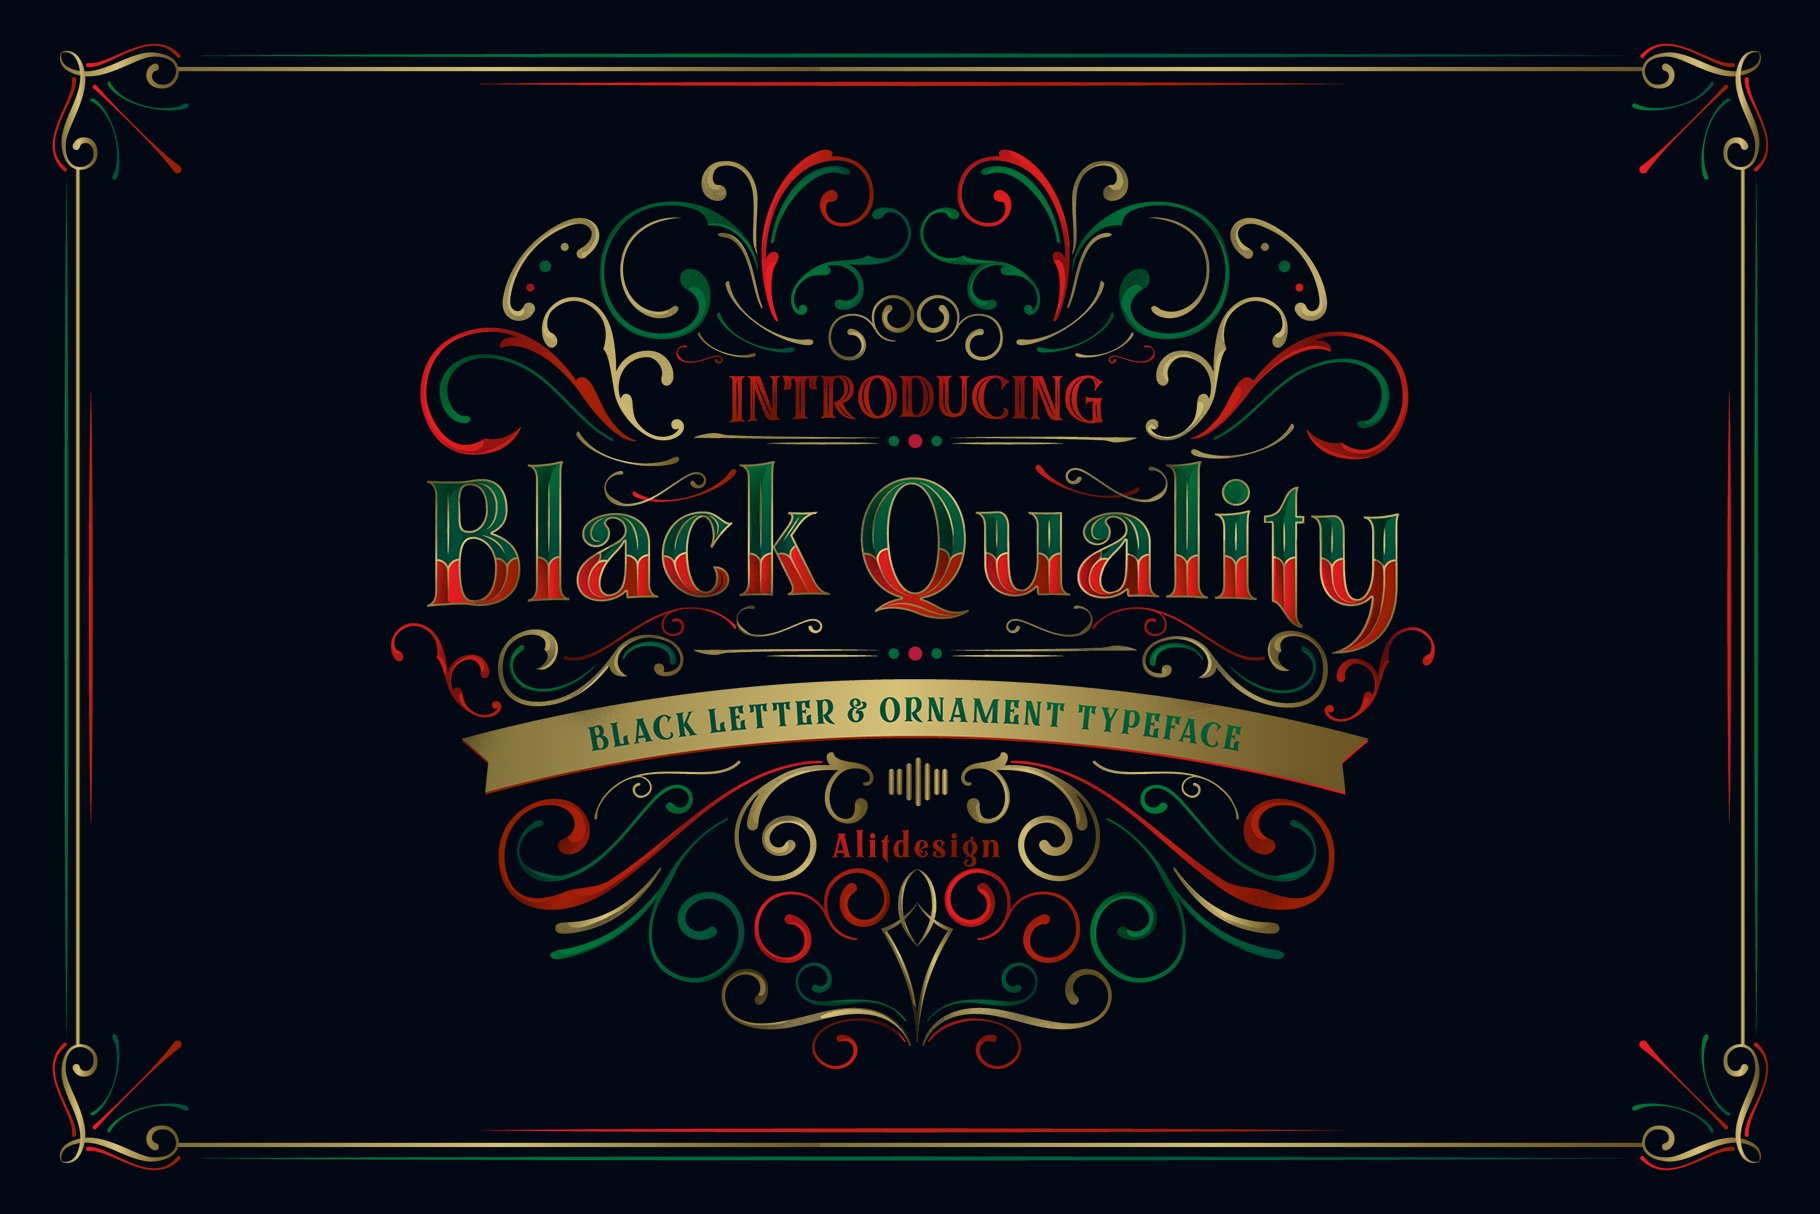 Black Quality